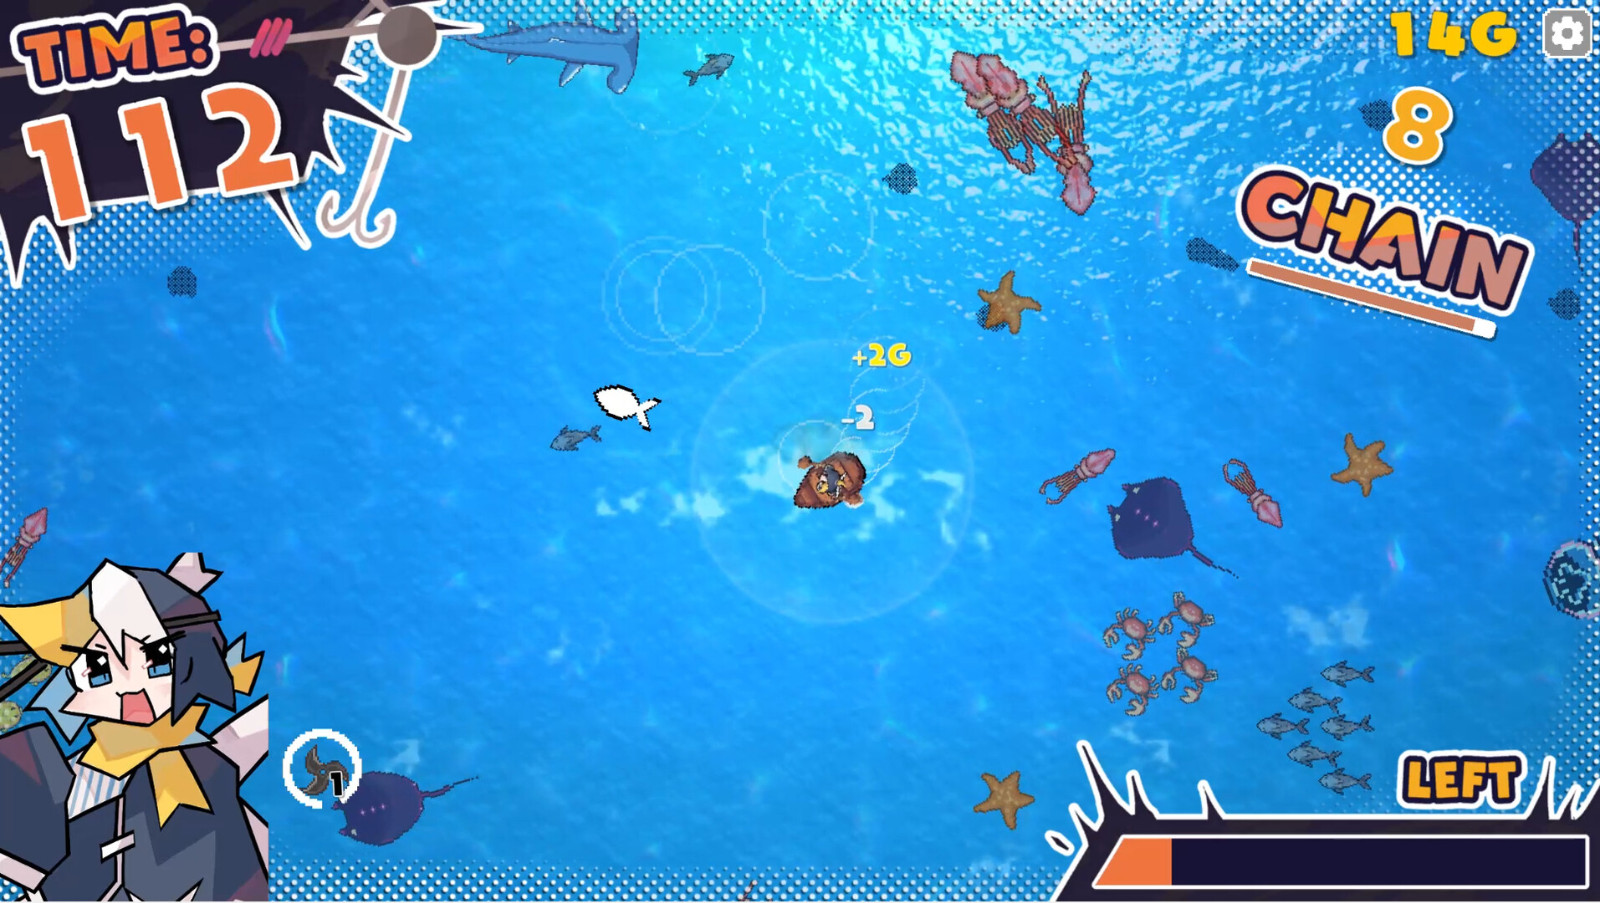 Roguelite俯视角射击游戏《忍者渔线传》Steam页面 2月8日发售